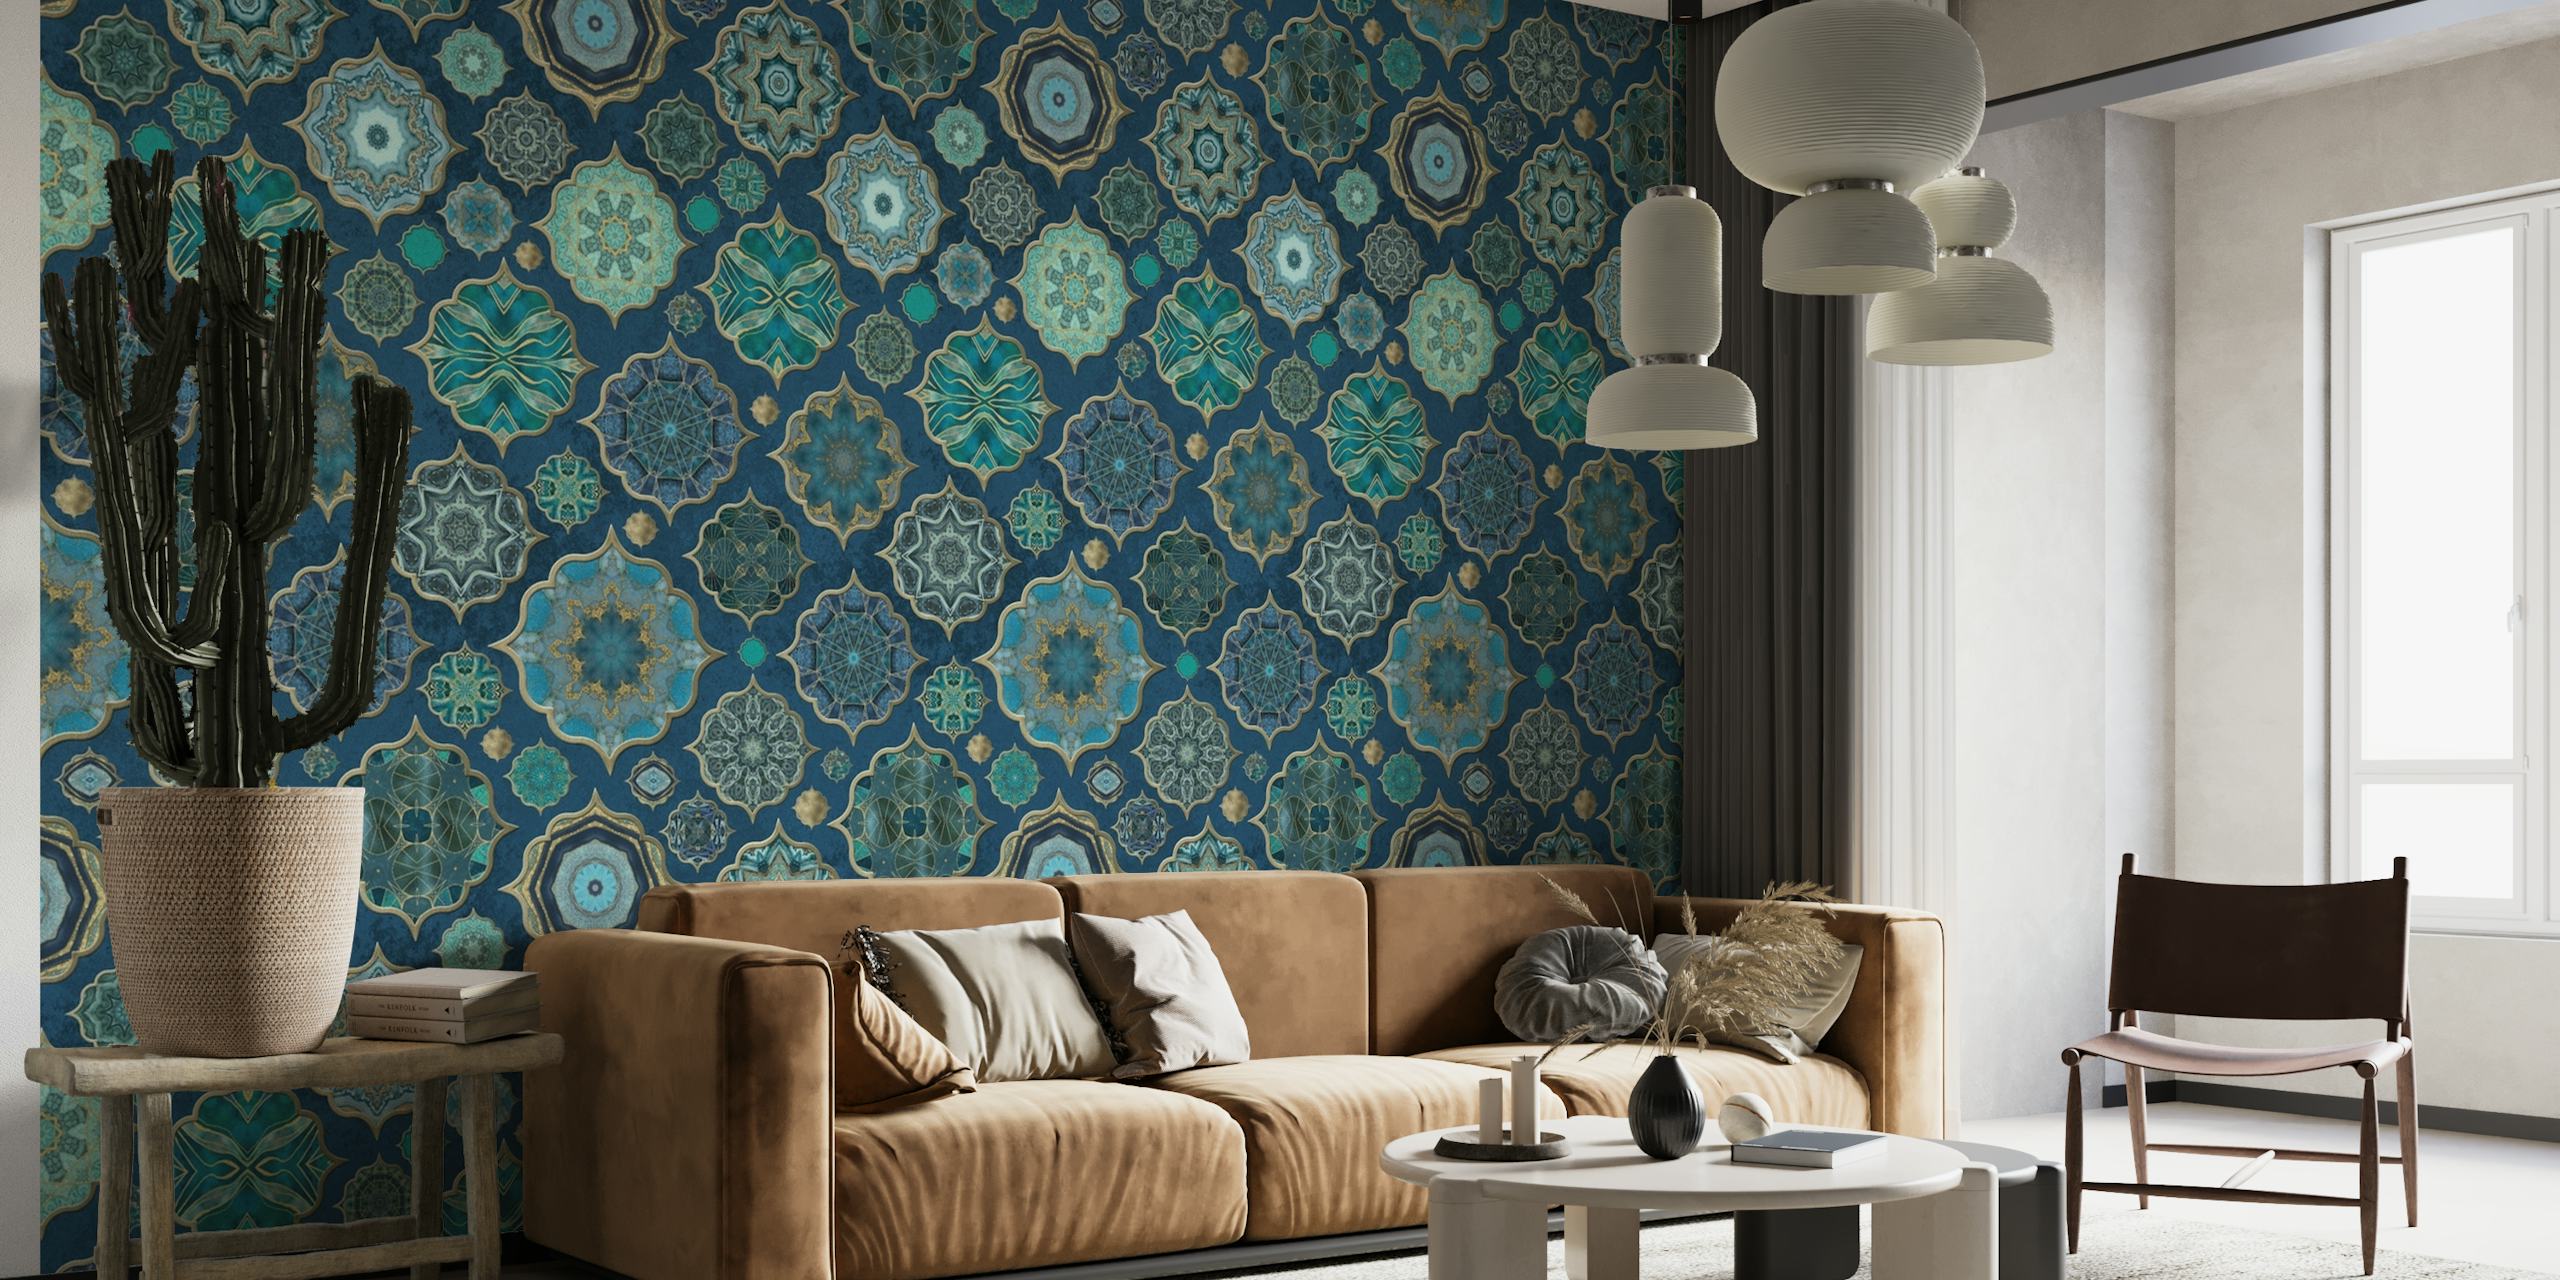 Moroccan Tiles Teal Luxury behang